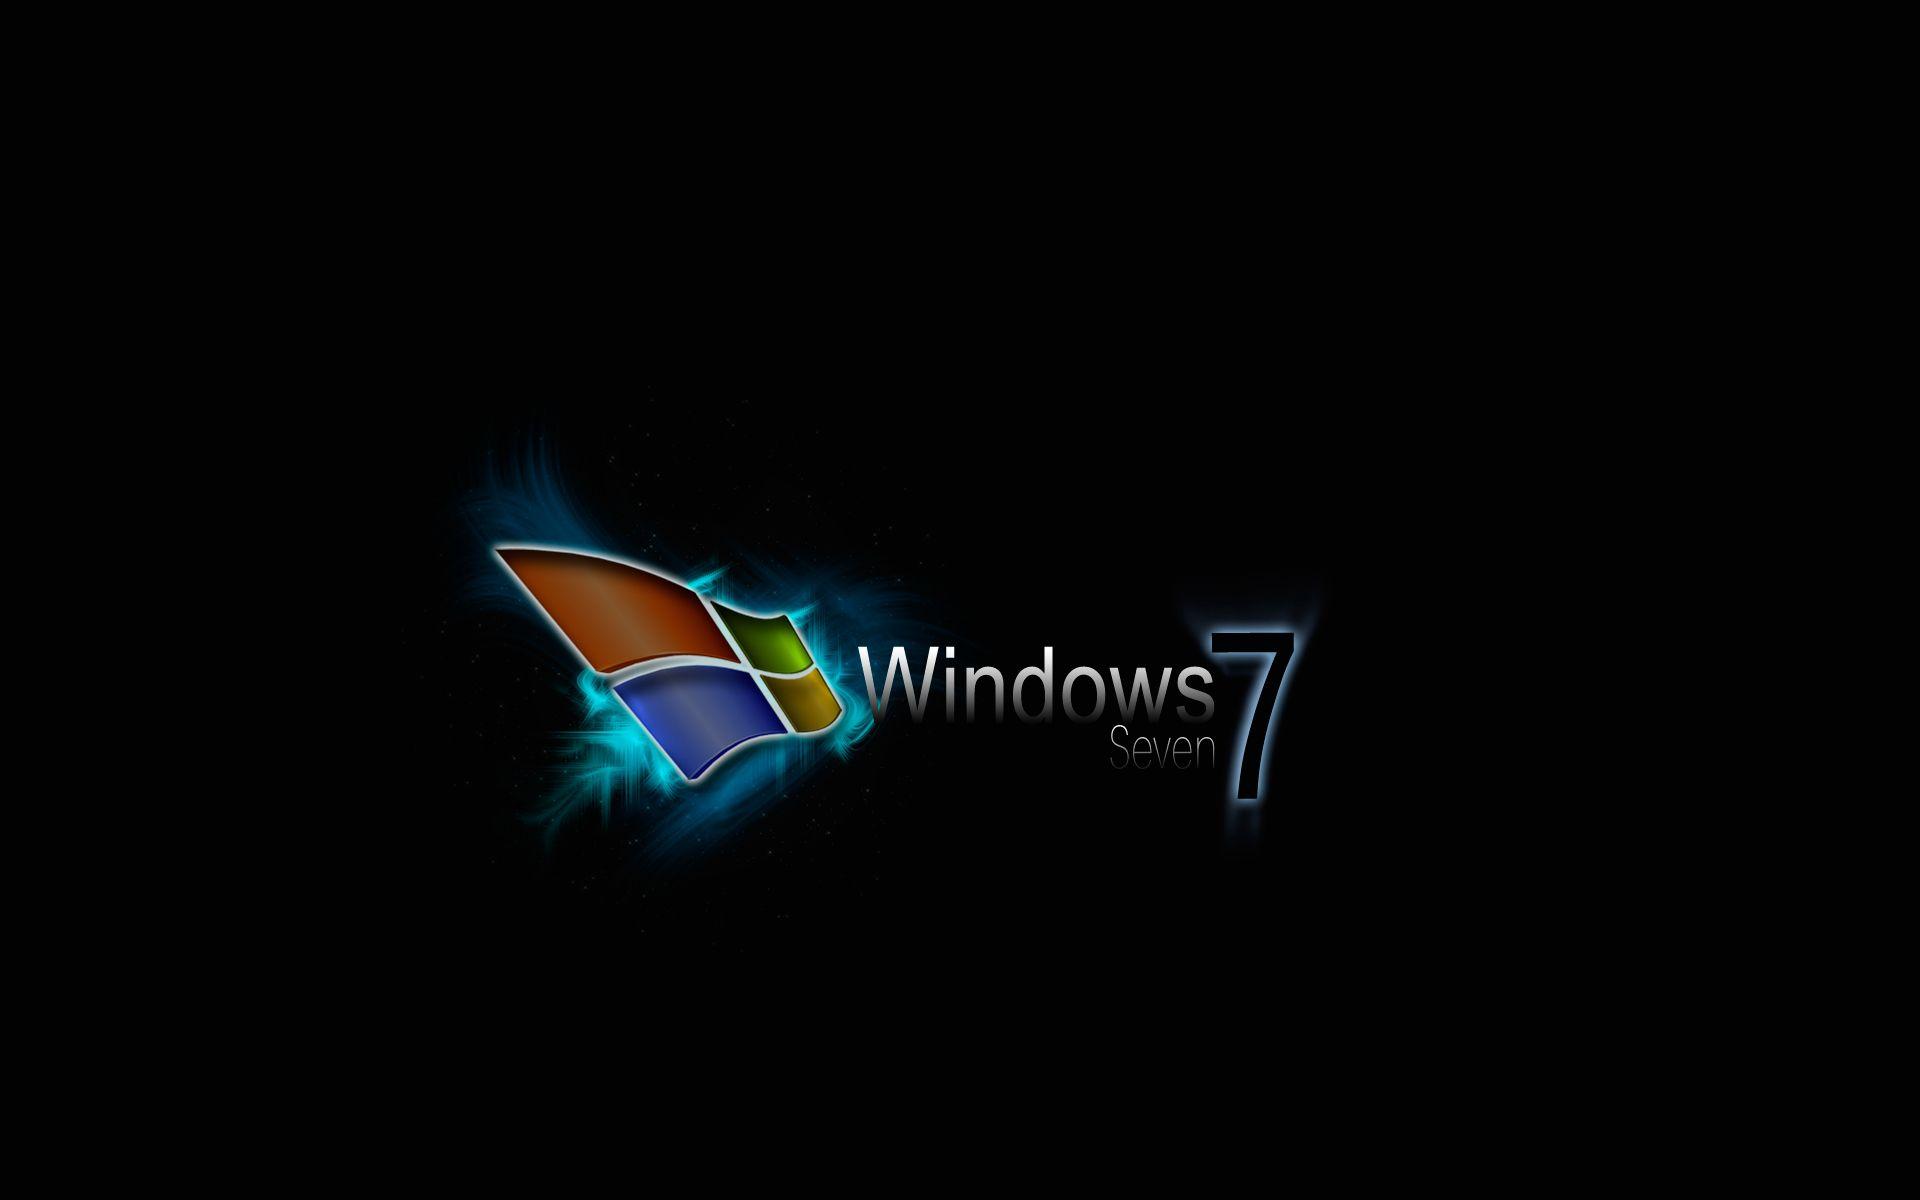 ZJ 35 Windows 7 Wallpaper, Windows 7 Full HD Picture and Wallpaper